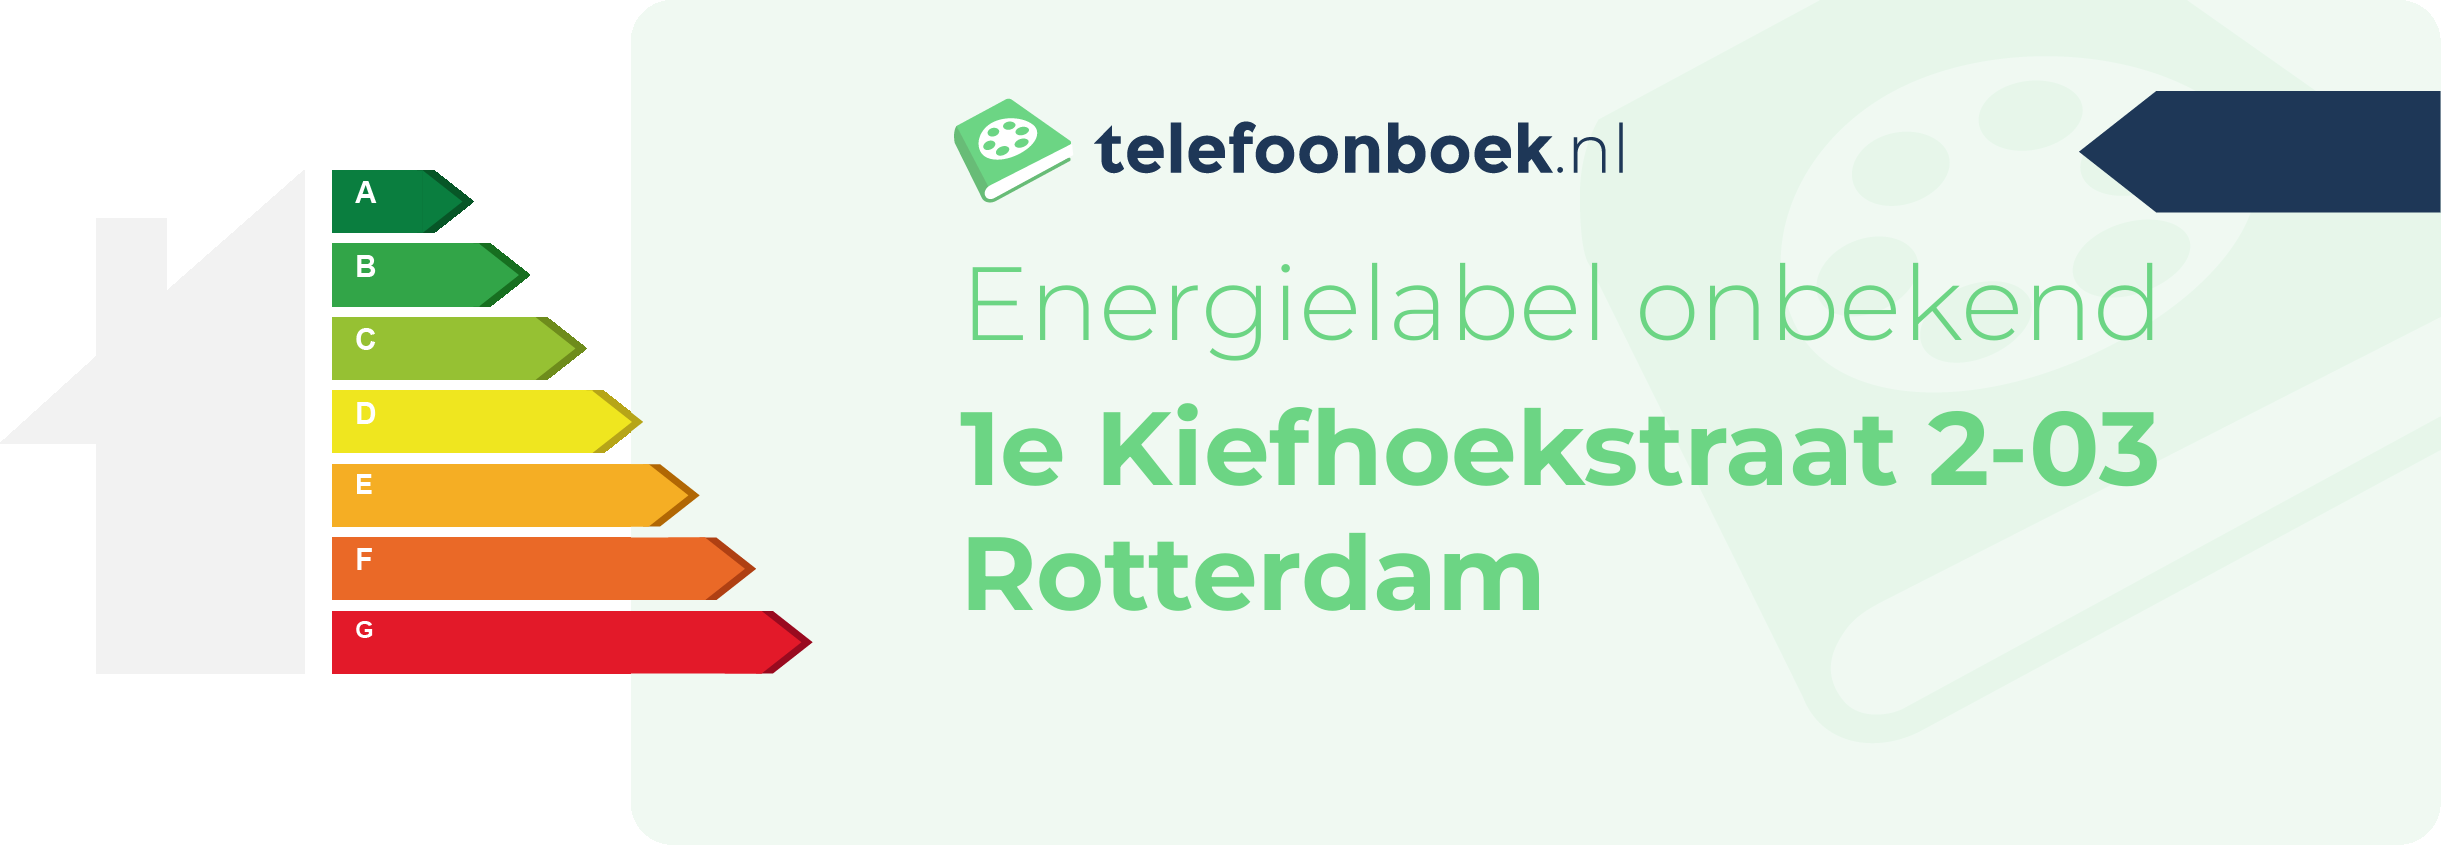 Energielabel 1e Kiefhoekstraat 2-03 Rotterdam